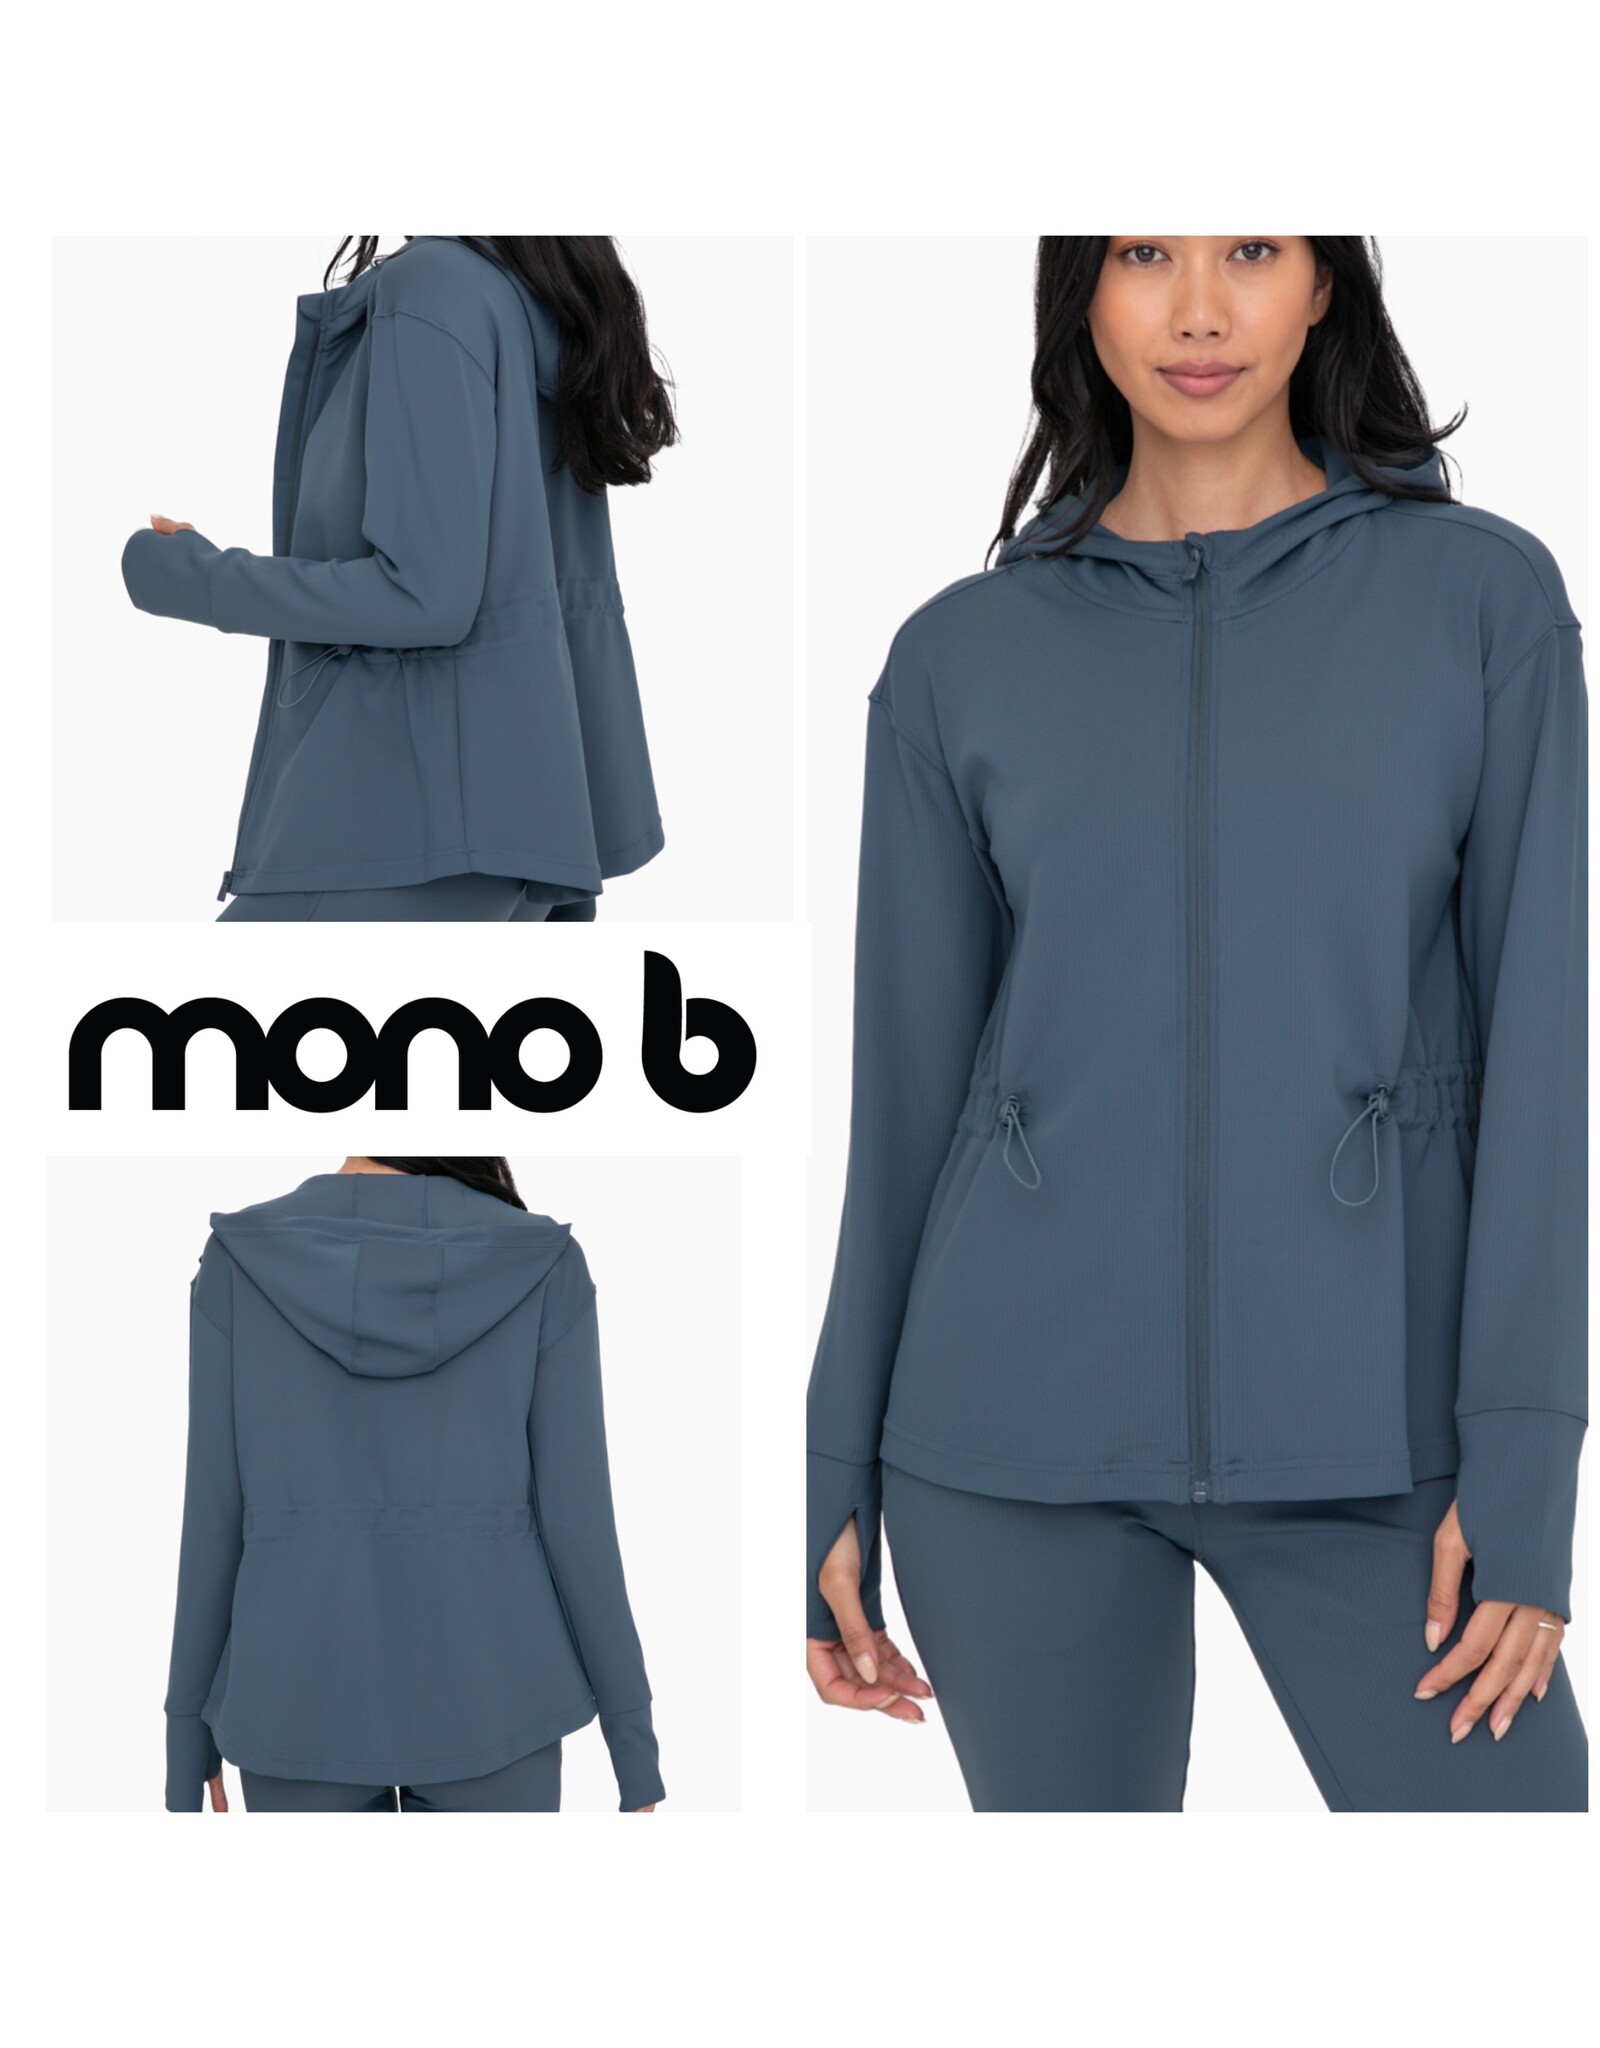 mono b Jacquard Hooded Jacket